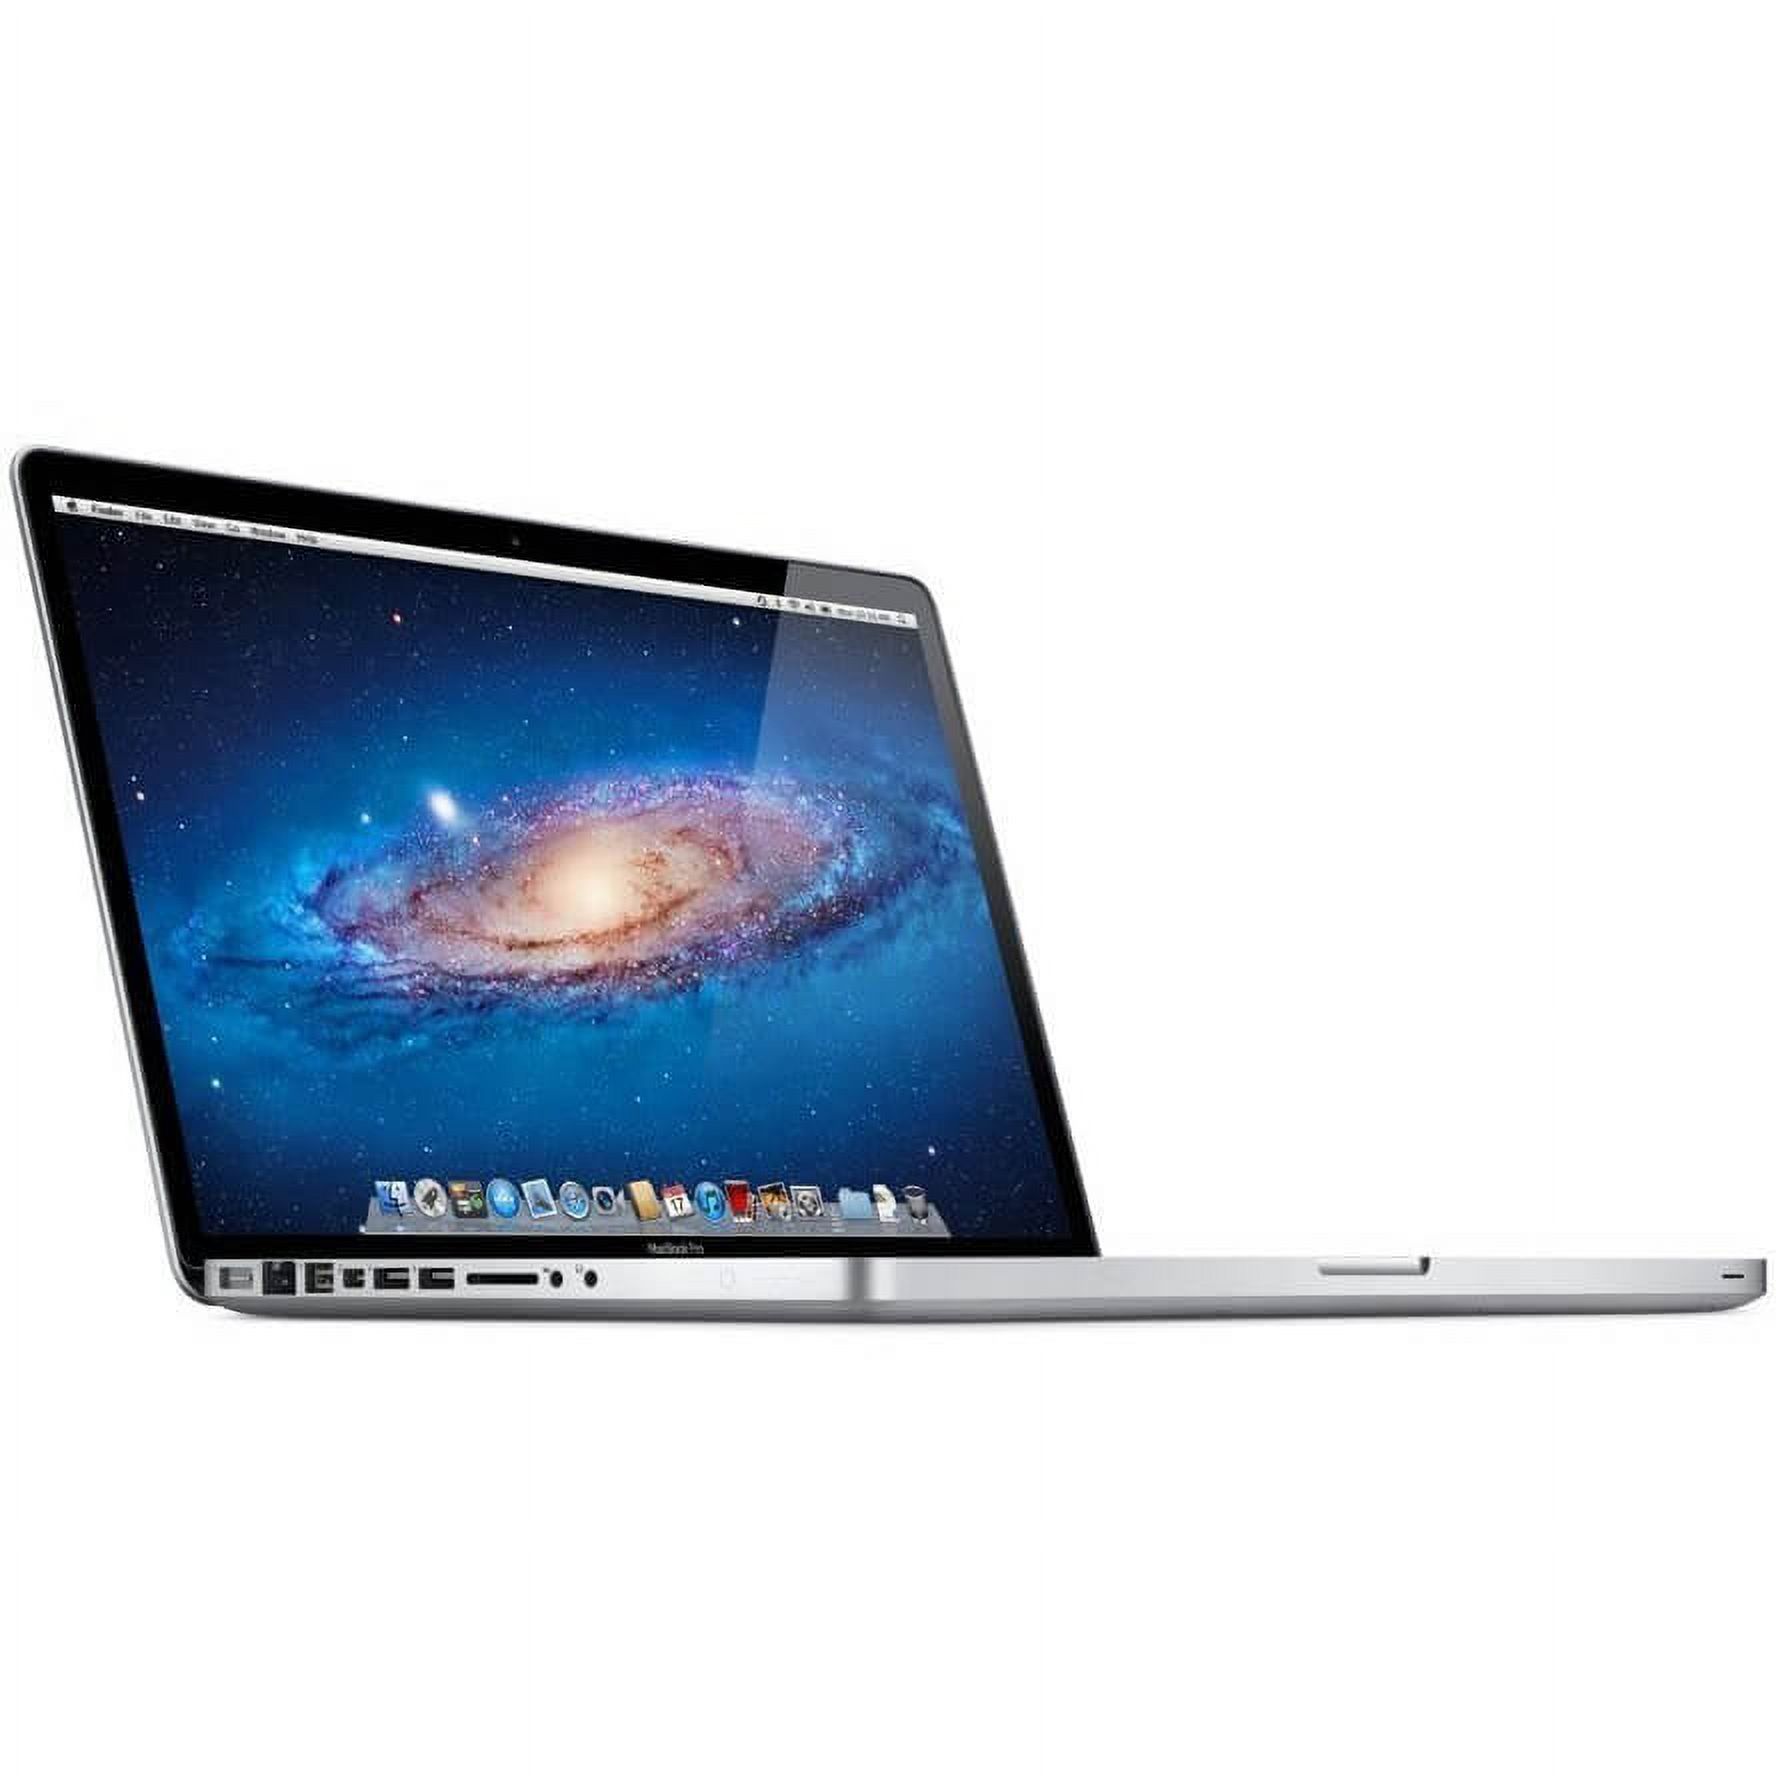 Restored Apple MacBook Pro Laptop, 13.3", Intel Core i5-3210M, 8GB RAM, 500GB HD, DVD-RW, Mac OS X 10.13.6 High Sierra, Silver, MD102LL/A (Refurbished) - image 2 of 4